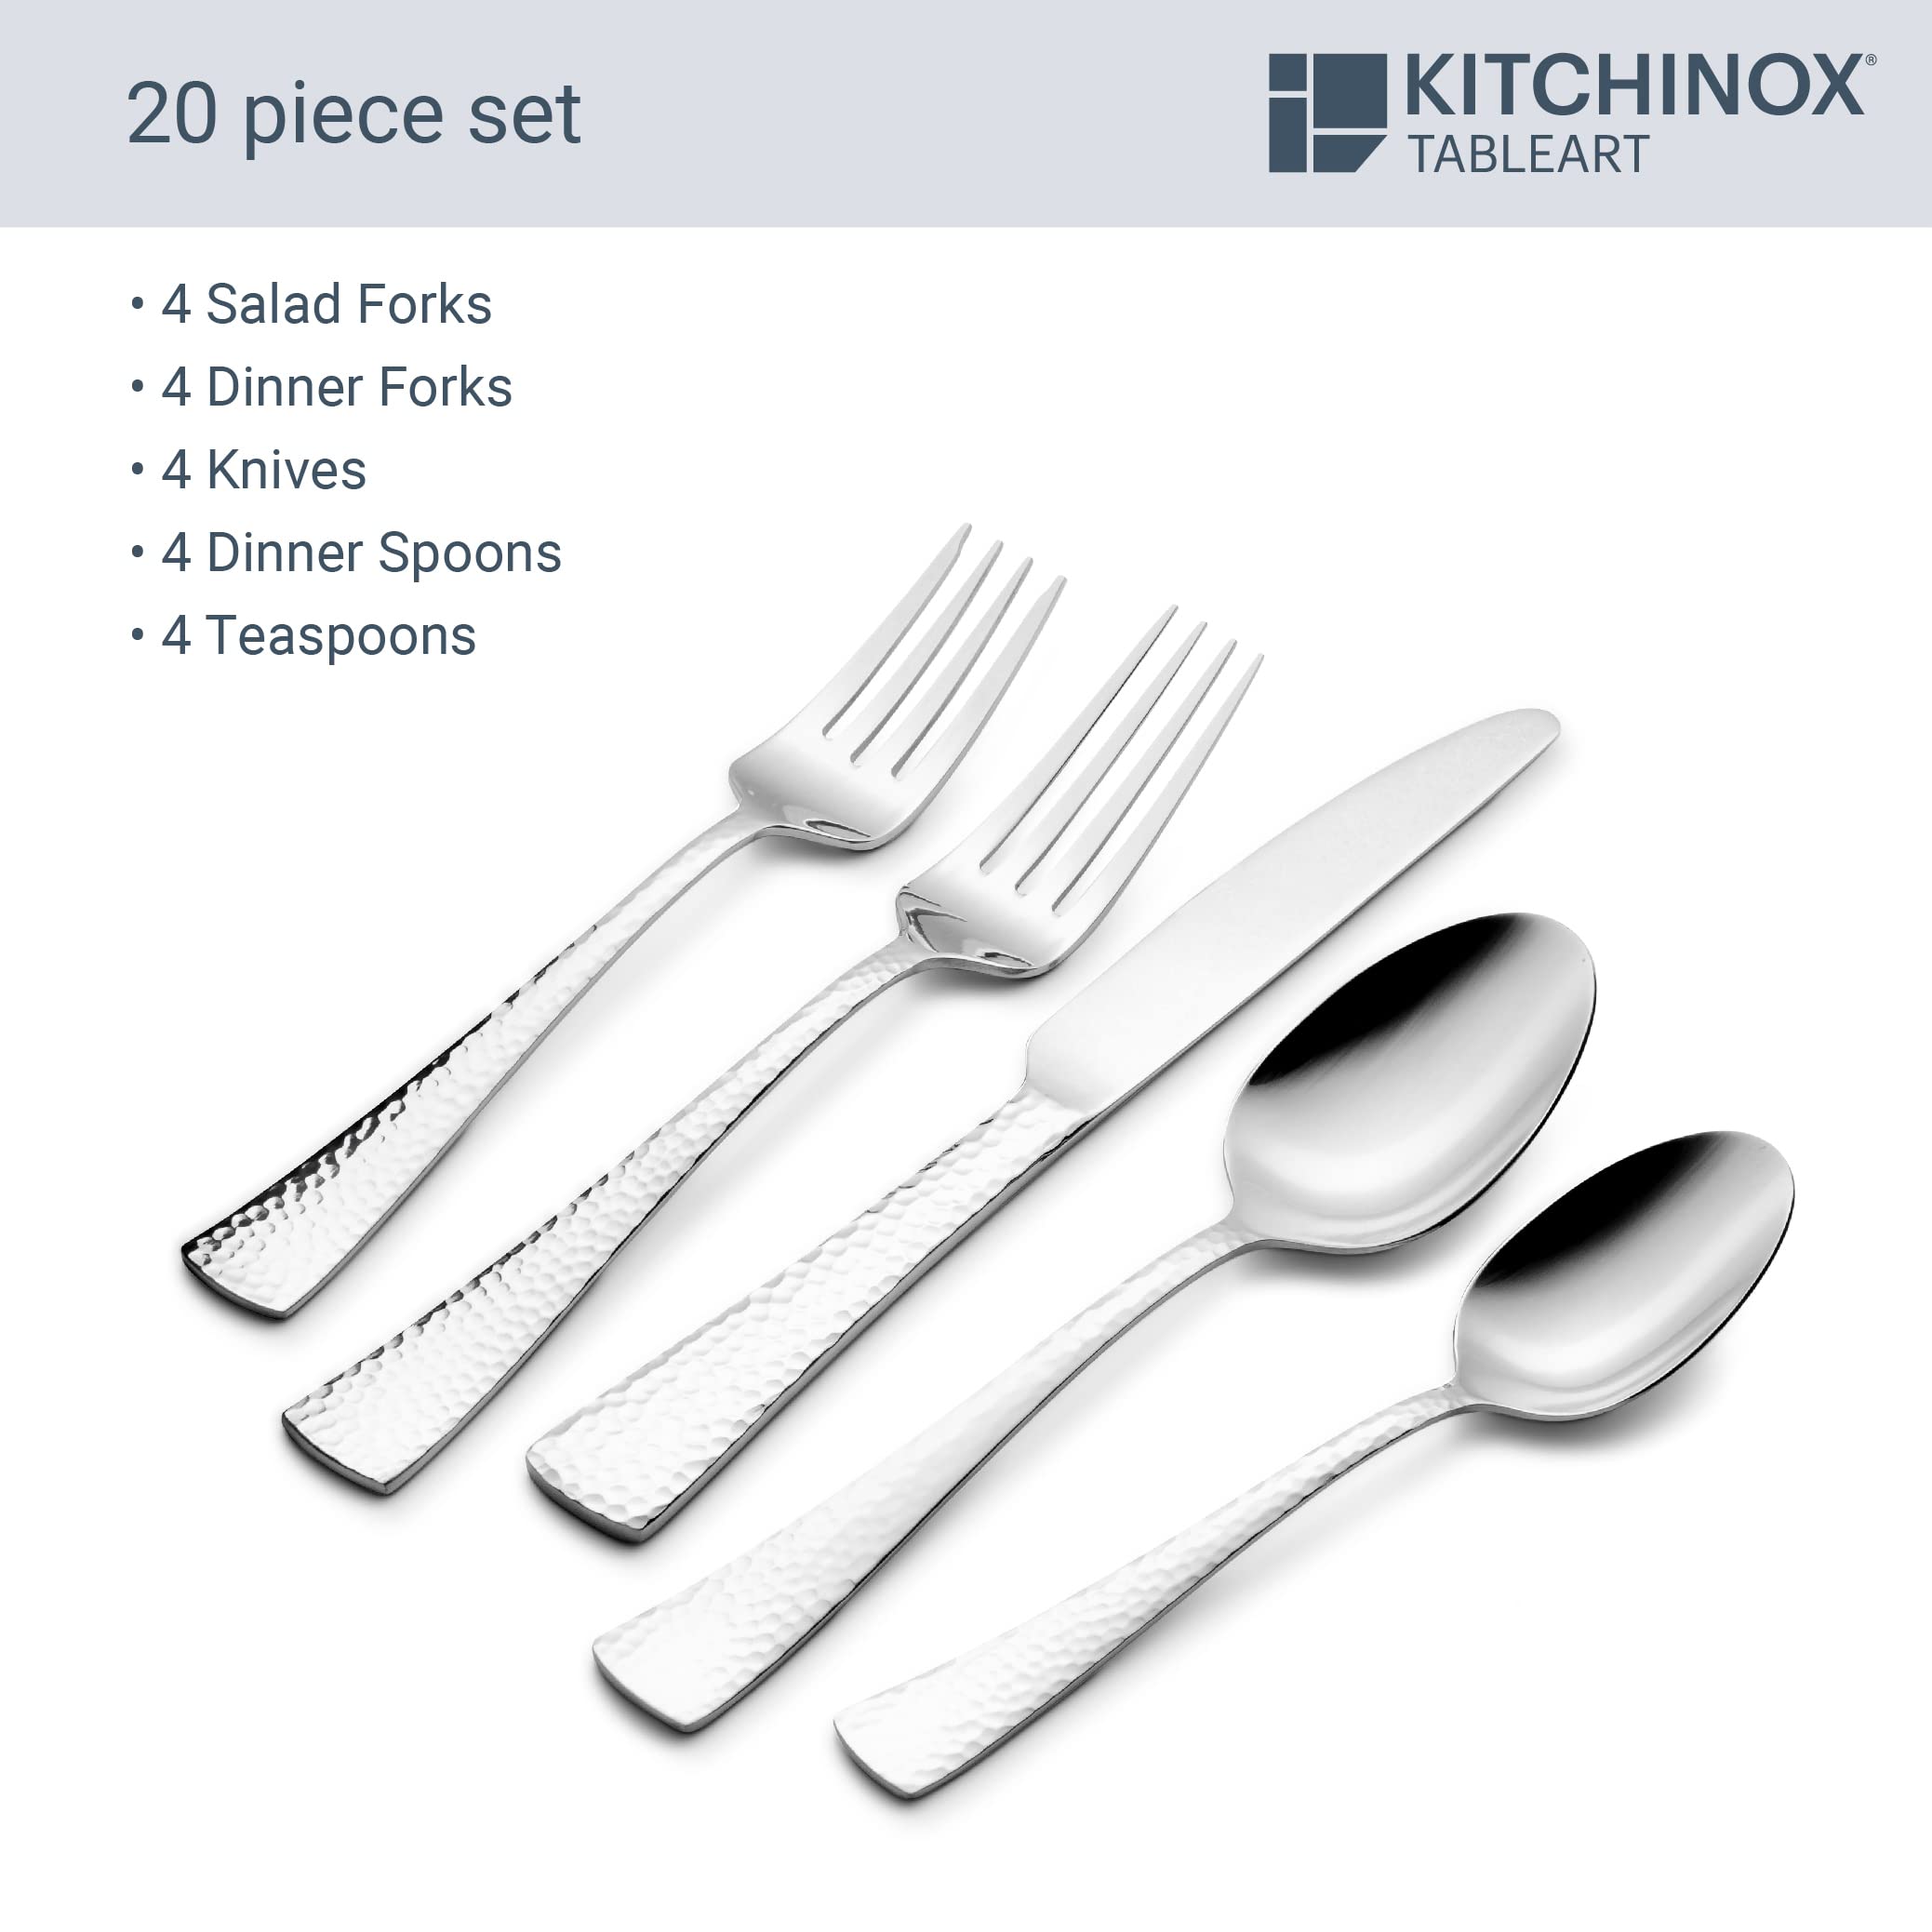 Kitchinox Perles 20-piece Stainless Steel Silverware Set, Flatware Service for 4